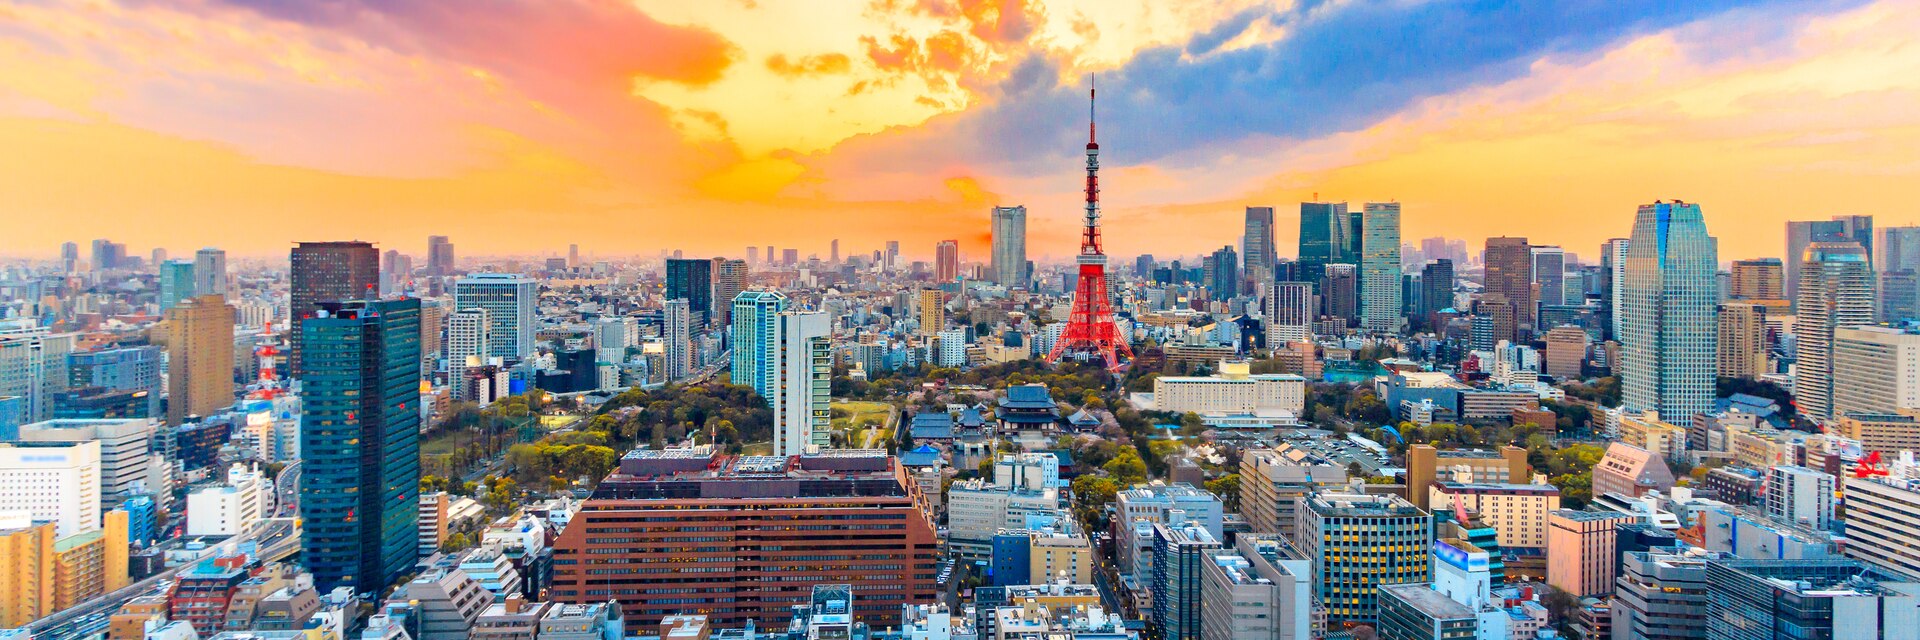 Tokio 2020 Banner Image